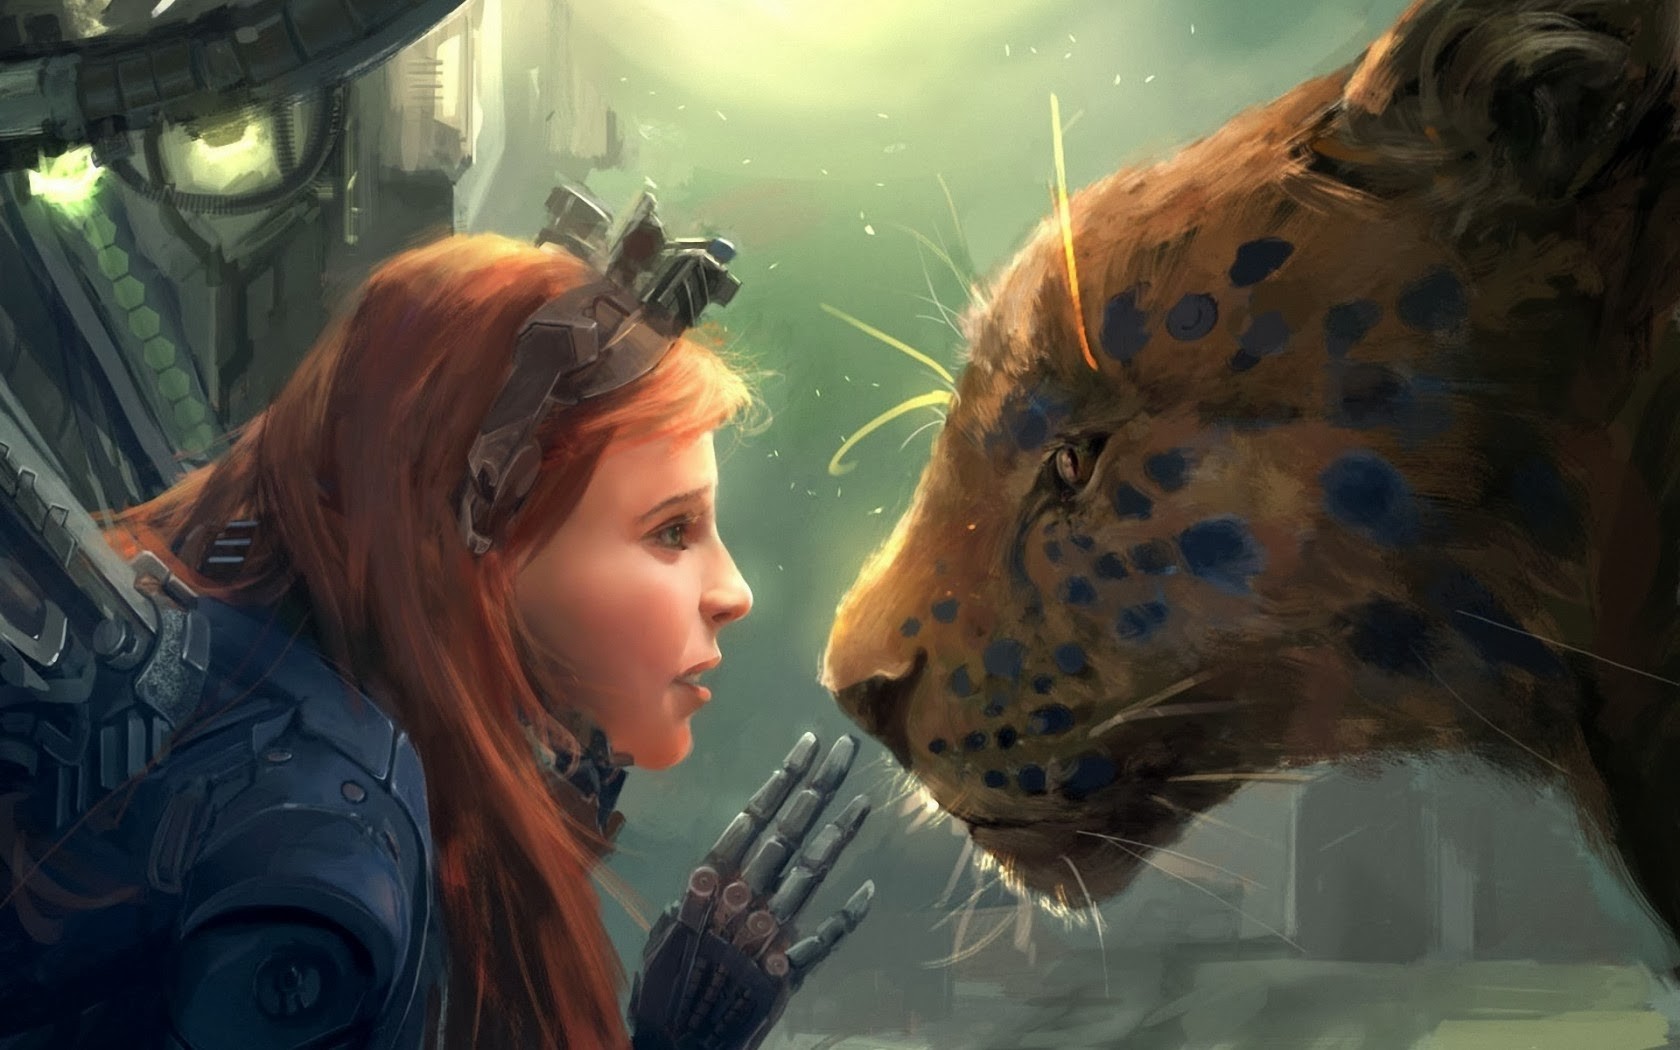 General 1680x1050 redhead leopard artwork women futuristic robot animals mammals science fiction science fiction women cyborg big cats face profile